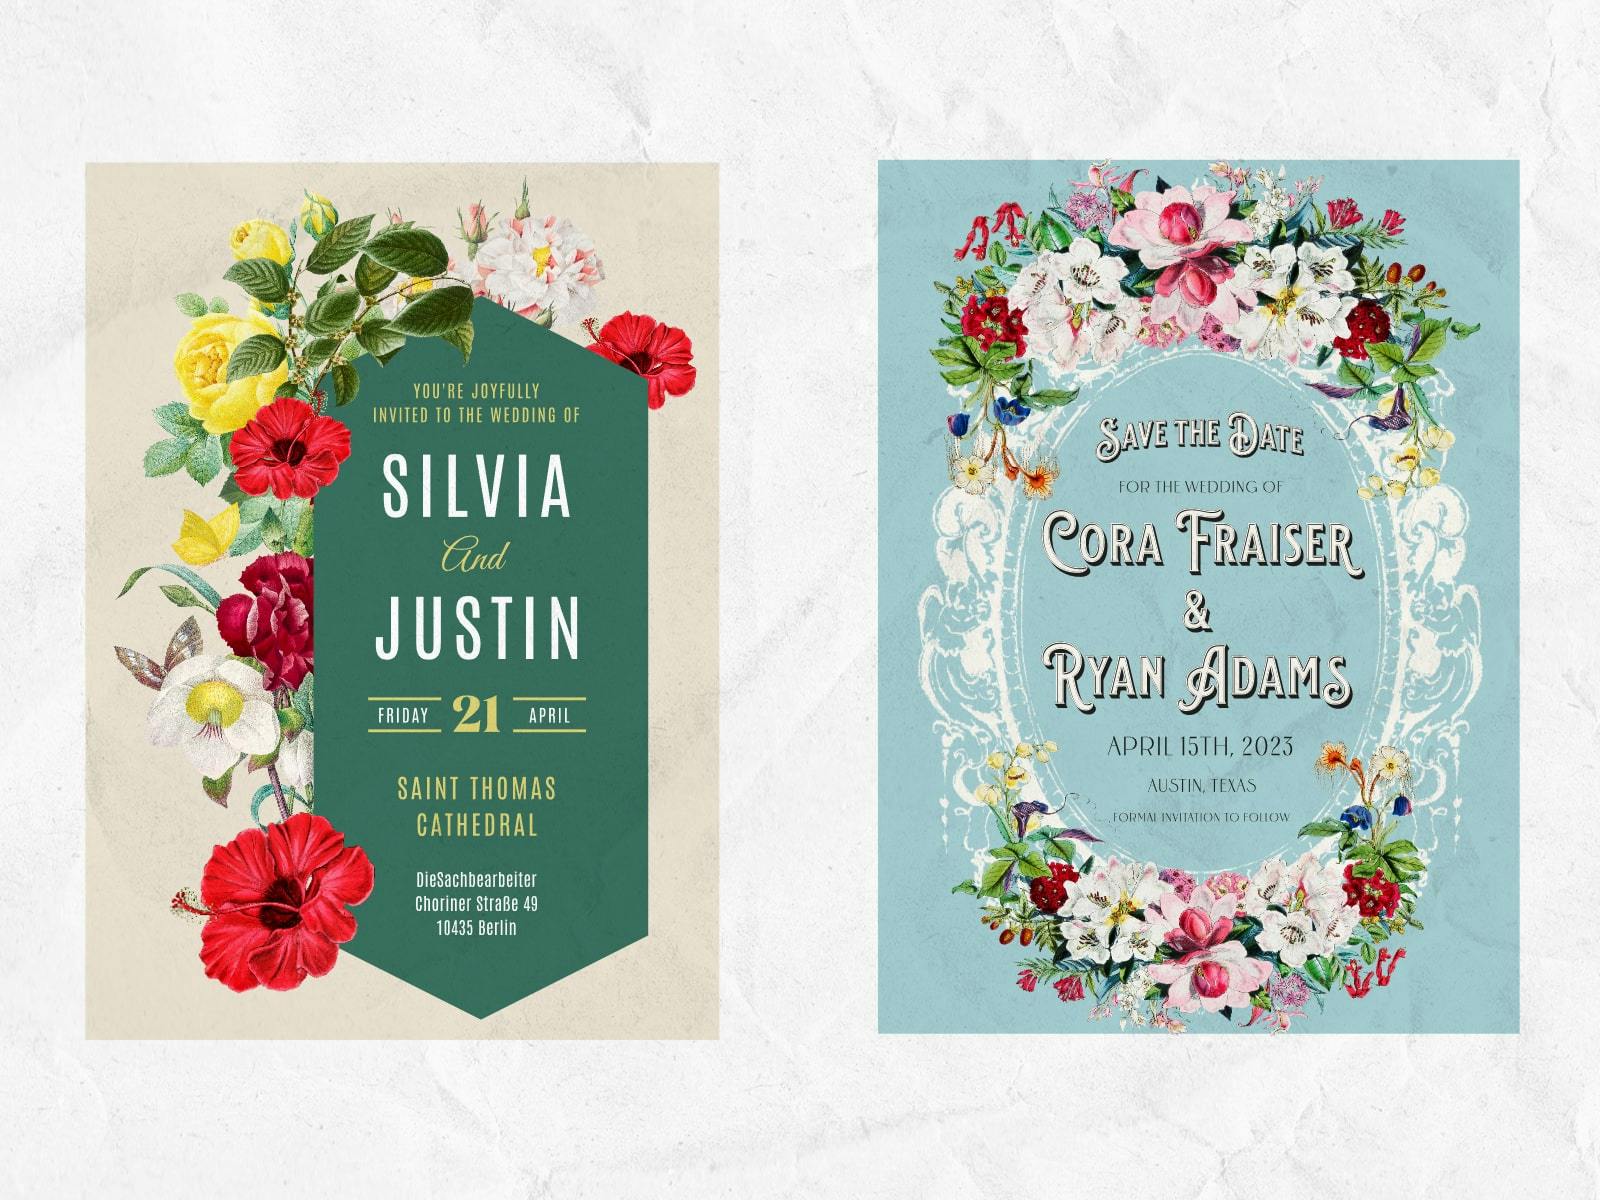 Customizable Watercolor Wedding Invitation Card: Collection of customizable watercolor wedding invitation cards